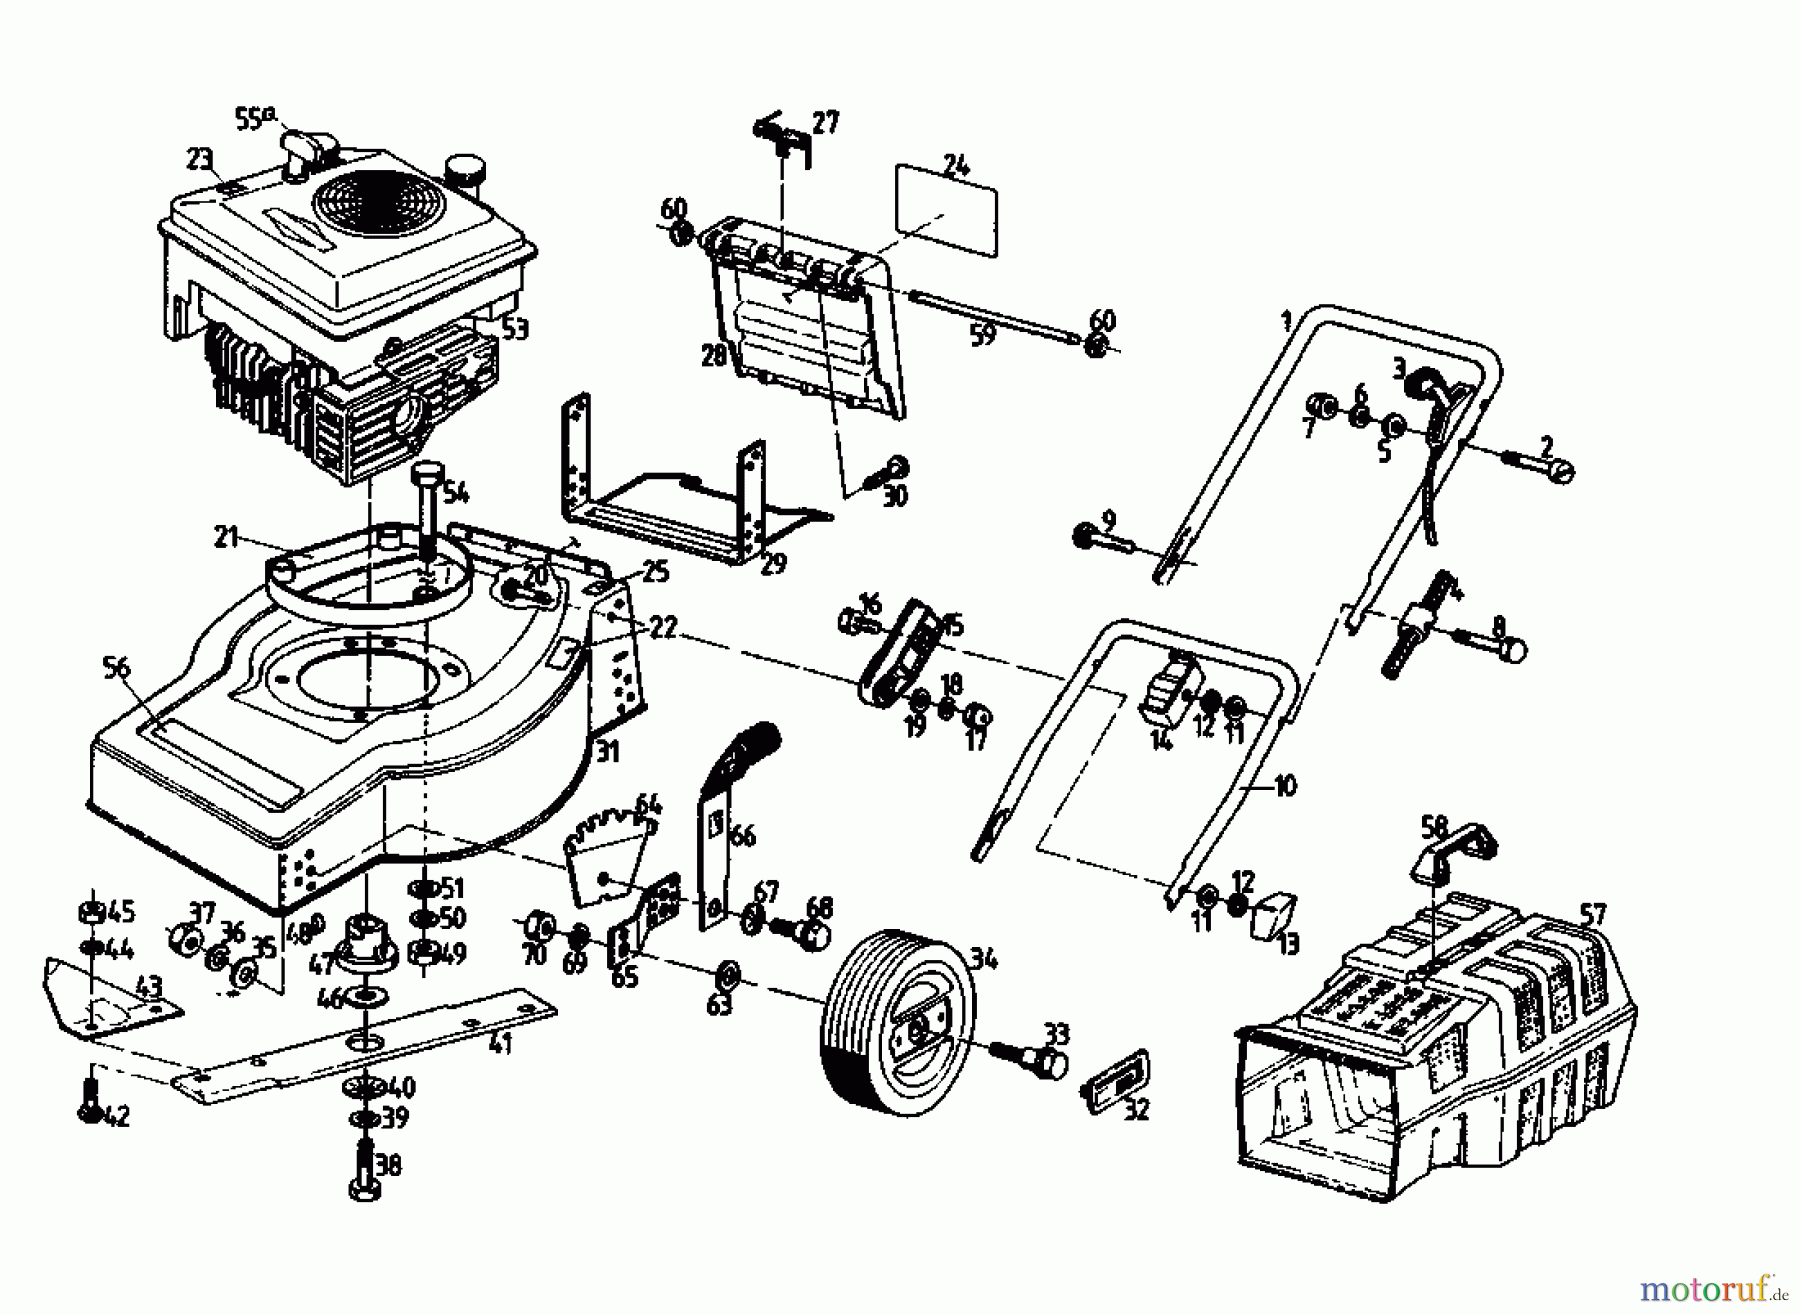  Gutbrod Petrol mower TURBO B-Q 02893.03  (1988) Basic machine